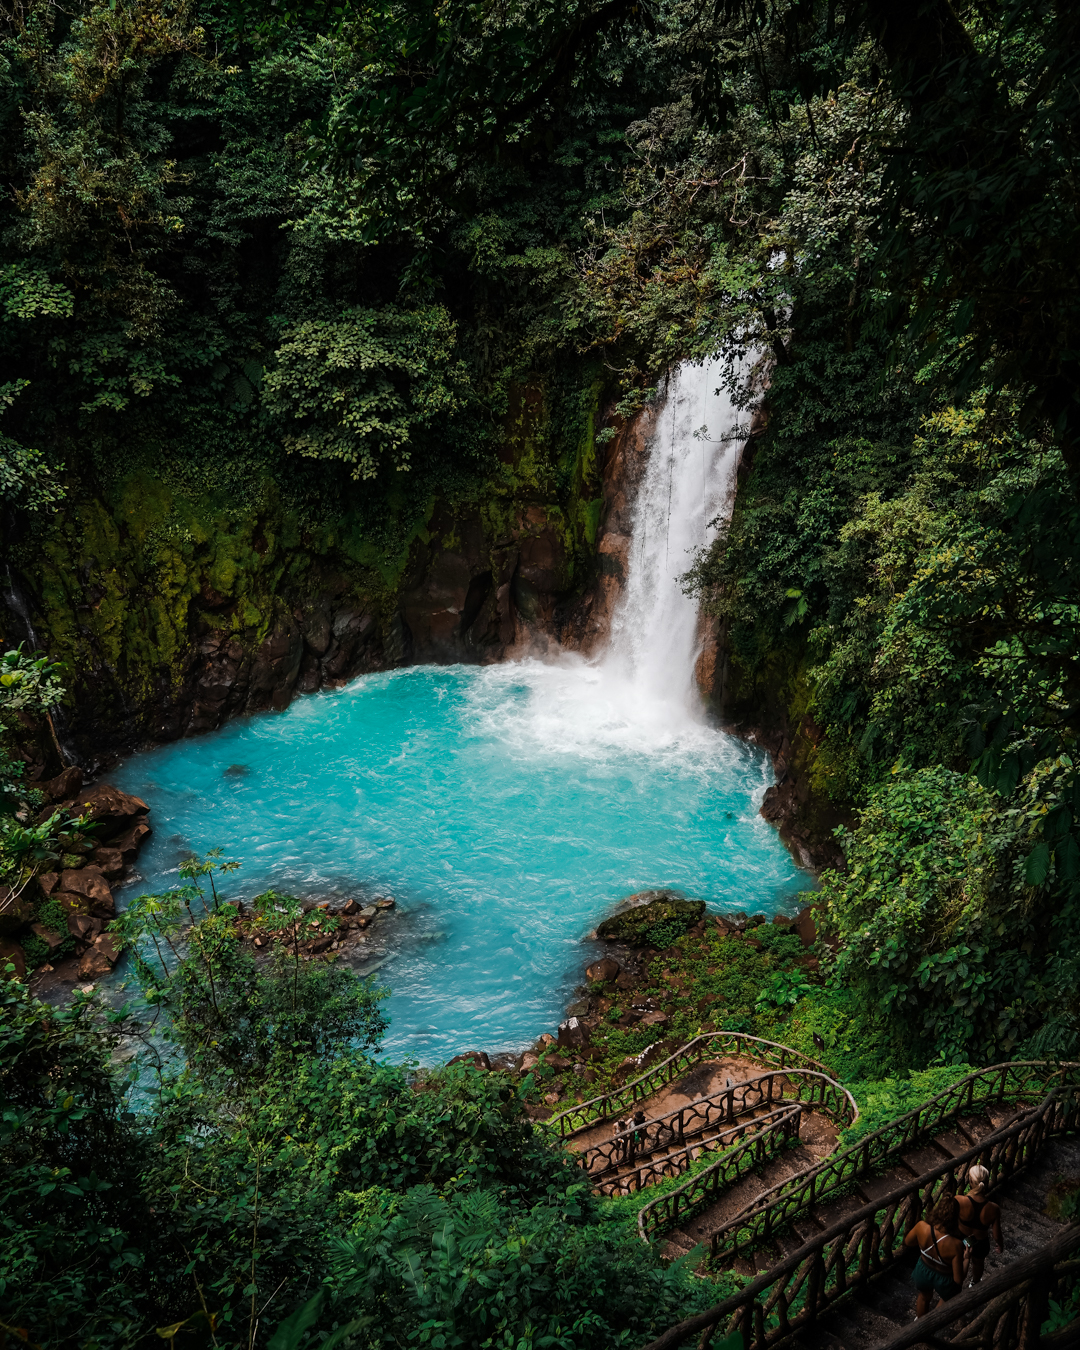 Blue waterfall in Costa Rica